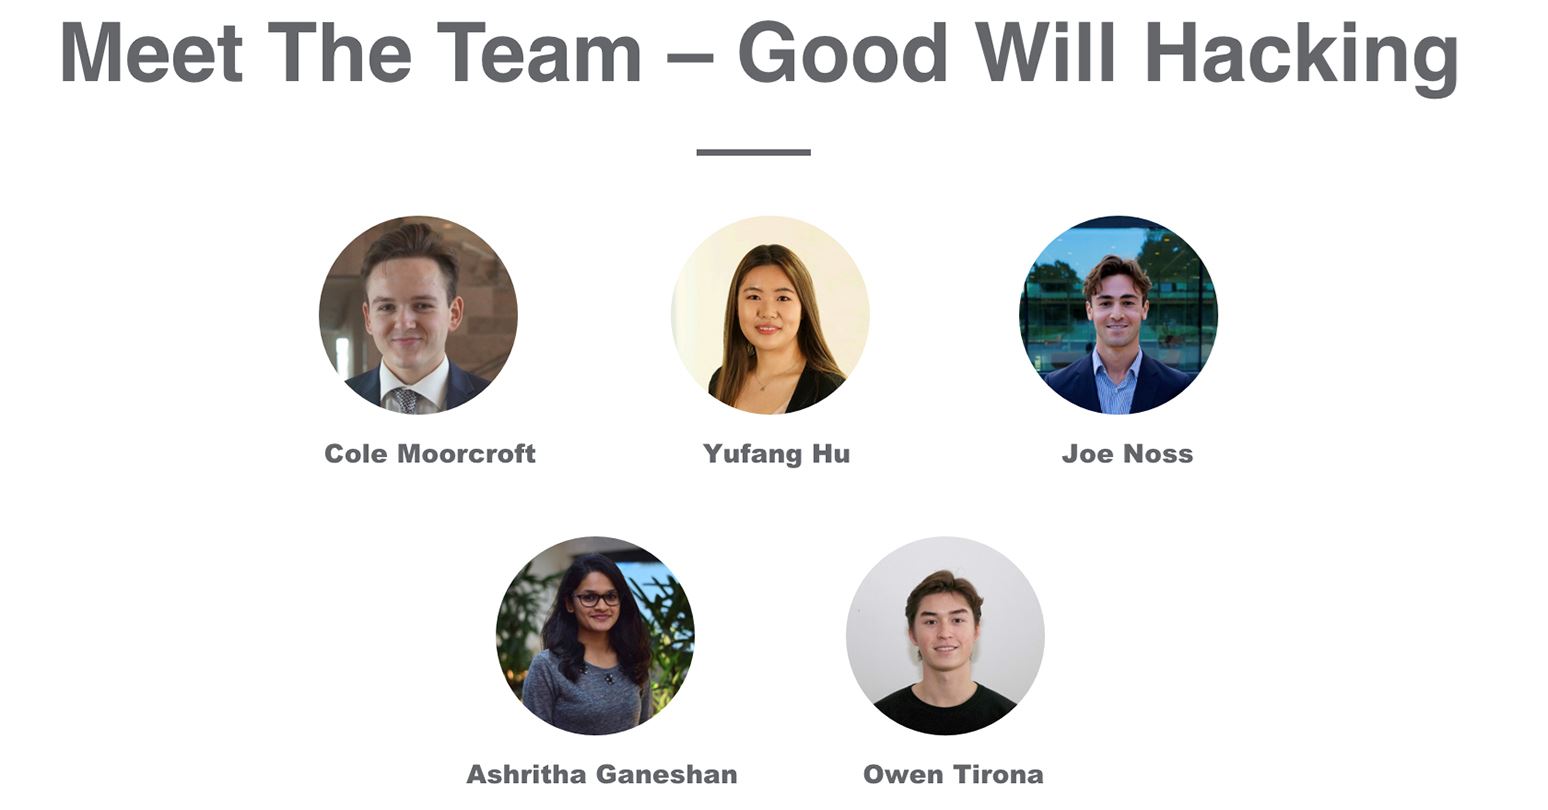 Team Good Will Hacking (top, l-r) Cole Moorcroft, Yufang Hu, Joe Noss; (bottom, l-r) Ashritha Ganeshan, Owen Tirona